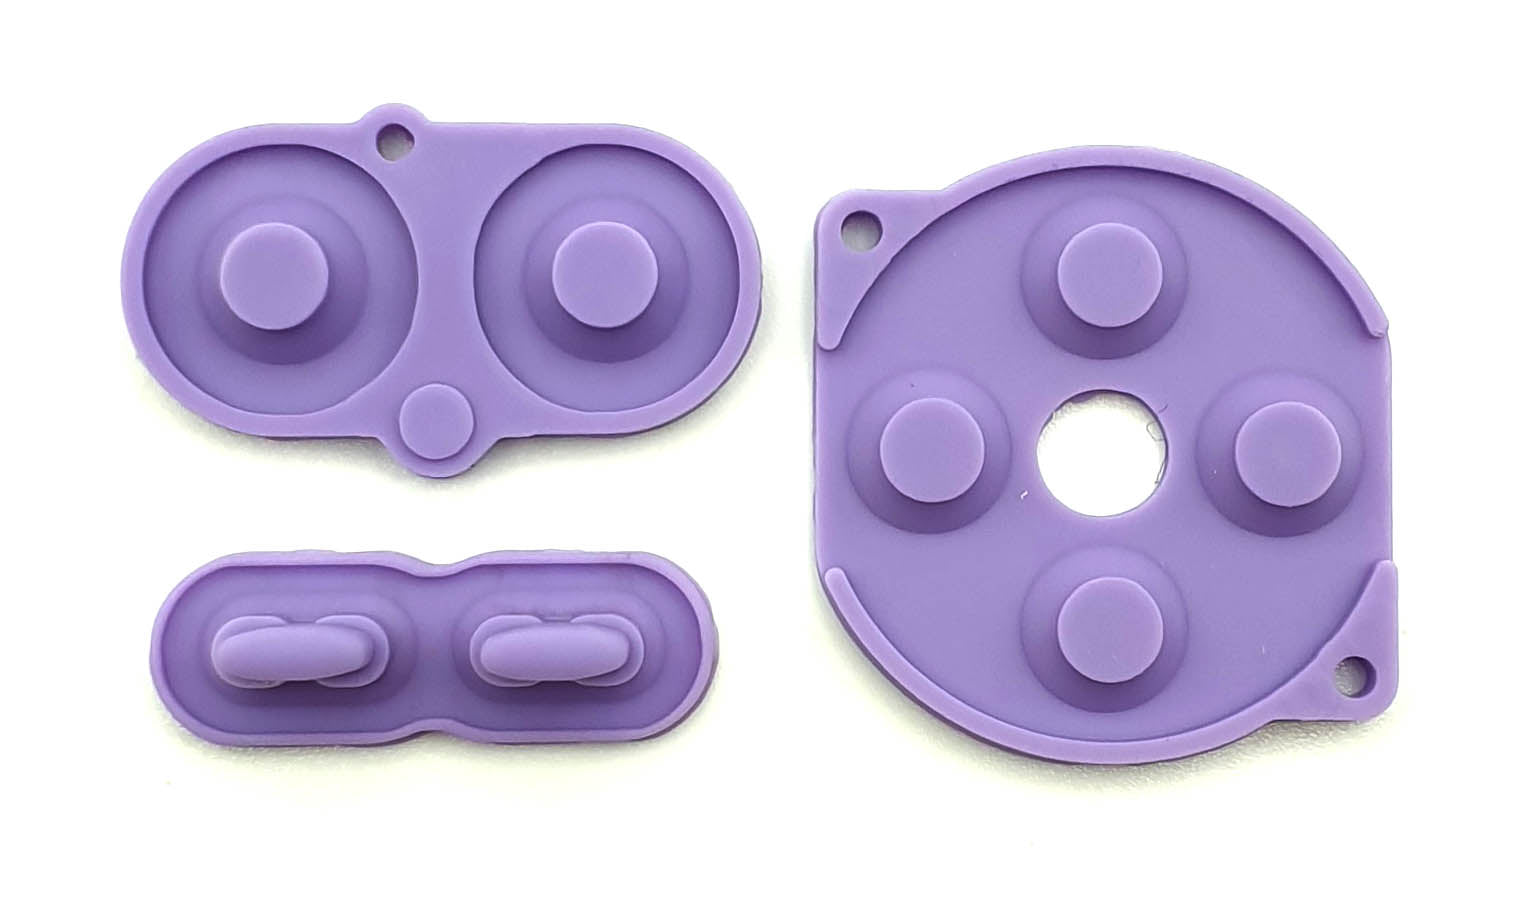 GameBoy Color: almohadillas de silicona (por Retrohahn) 